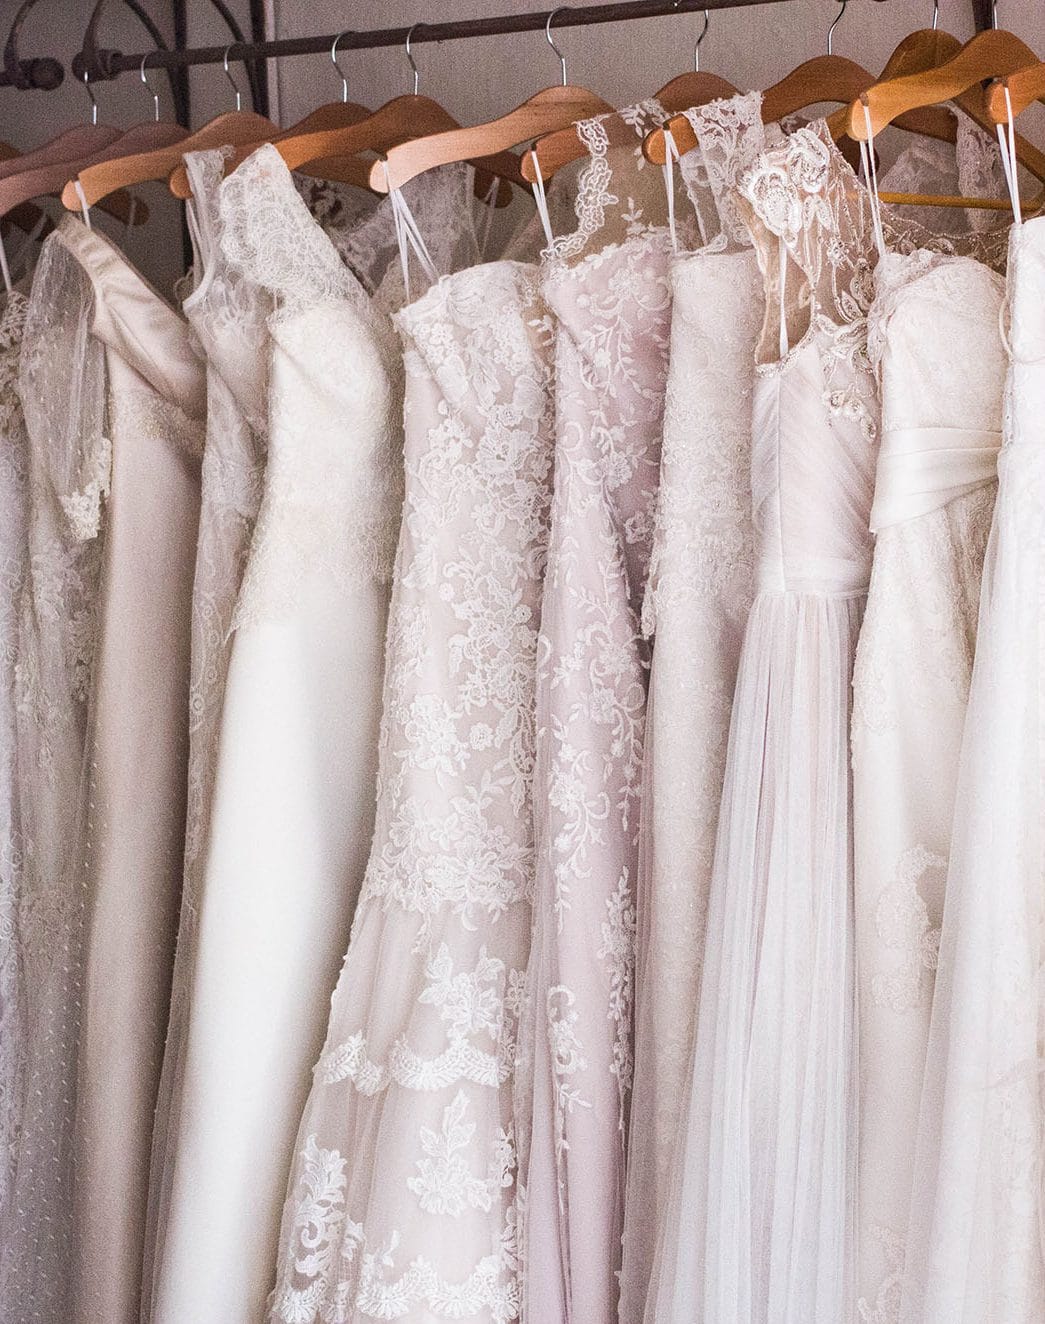 Wedding dresses on rack